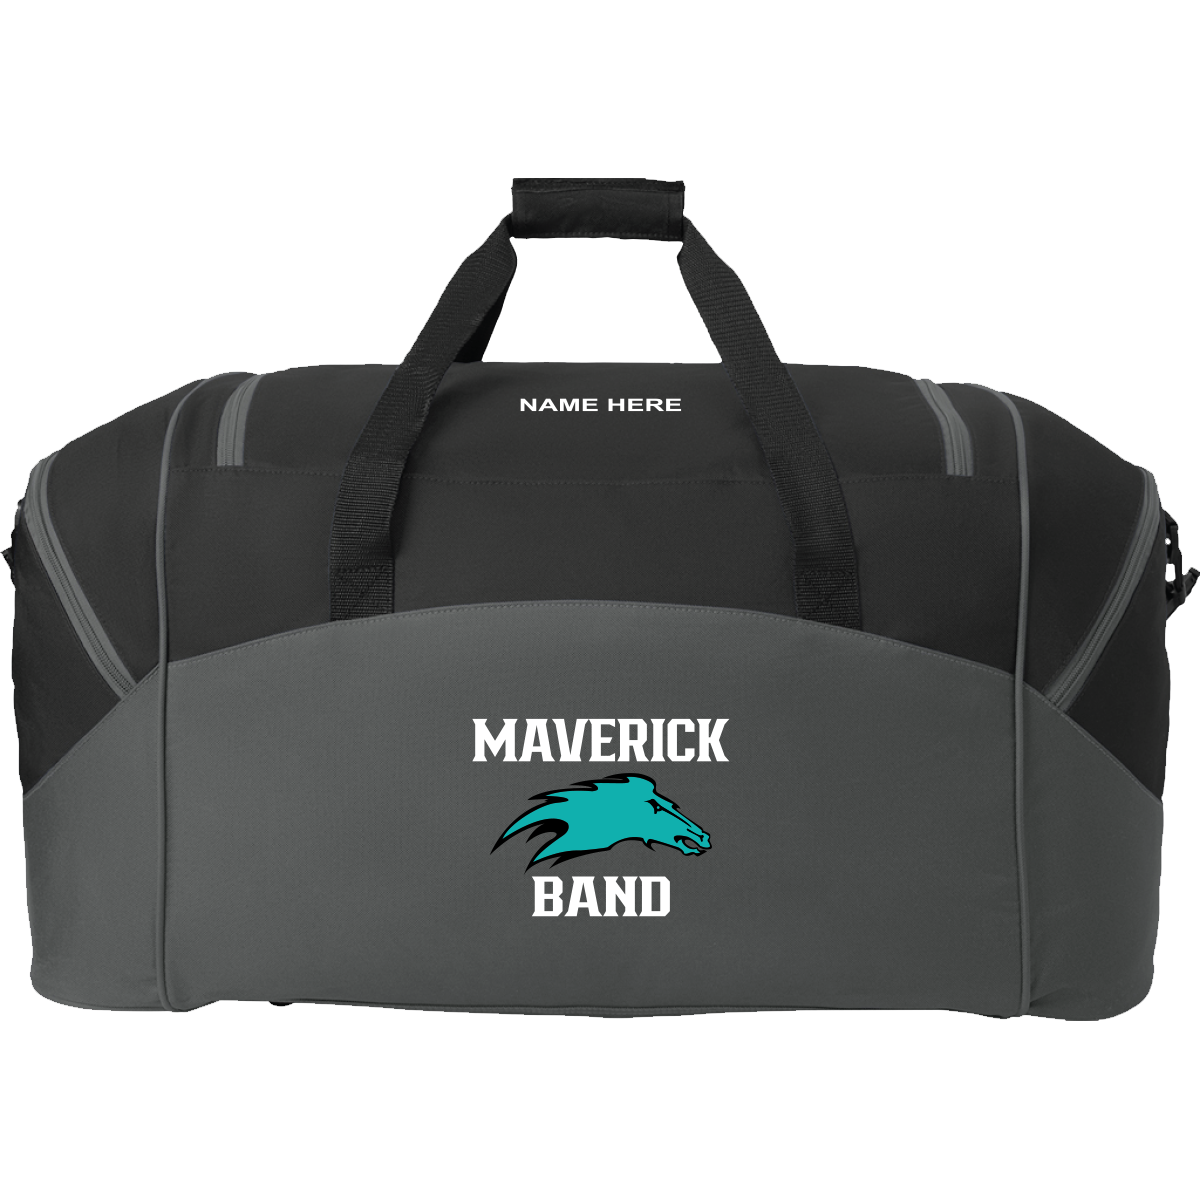 Maverick Tote bag - REQUIRED (1)